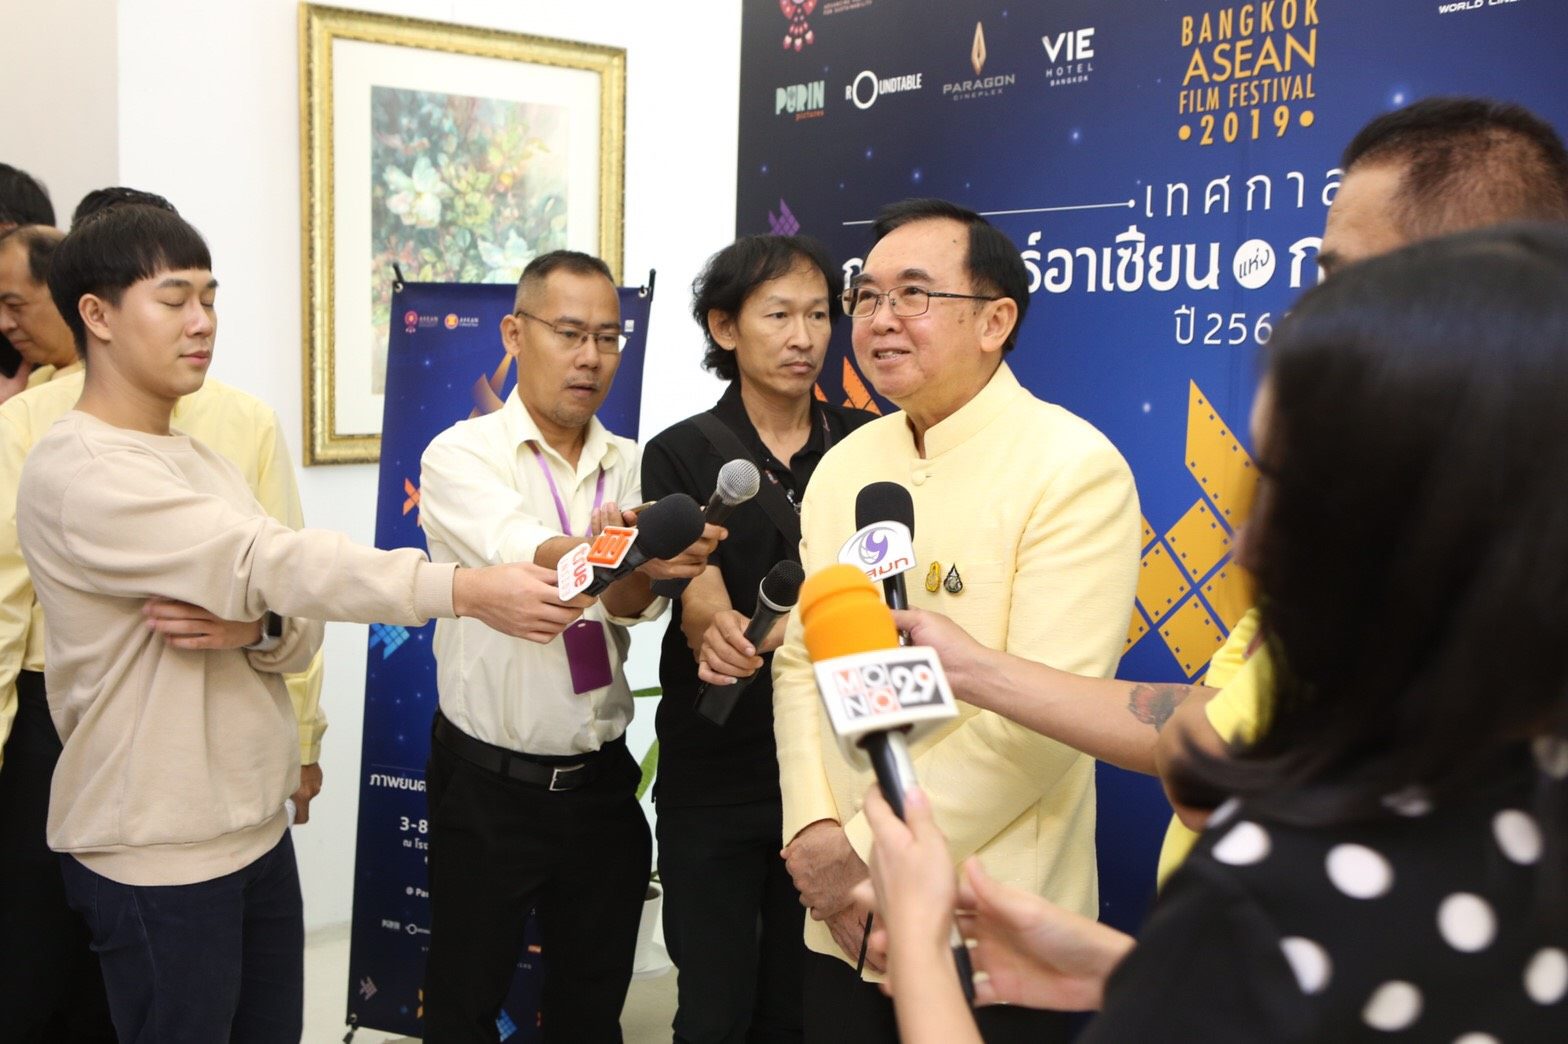 Bangkok ASEAN Film Festival 2019